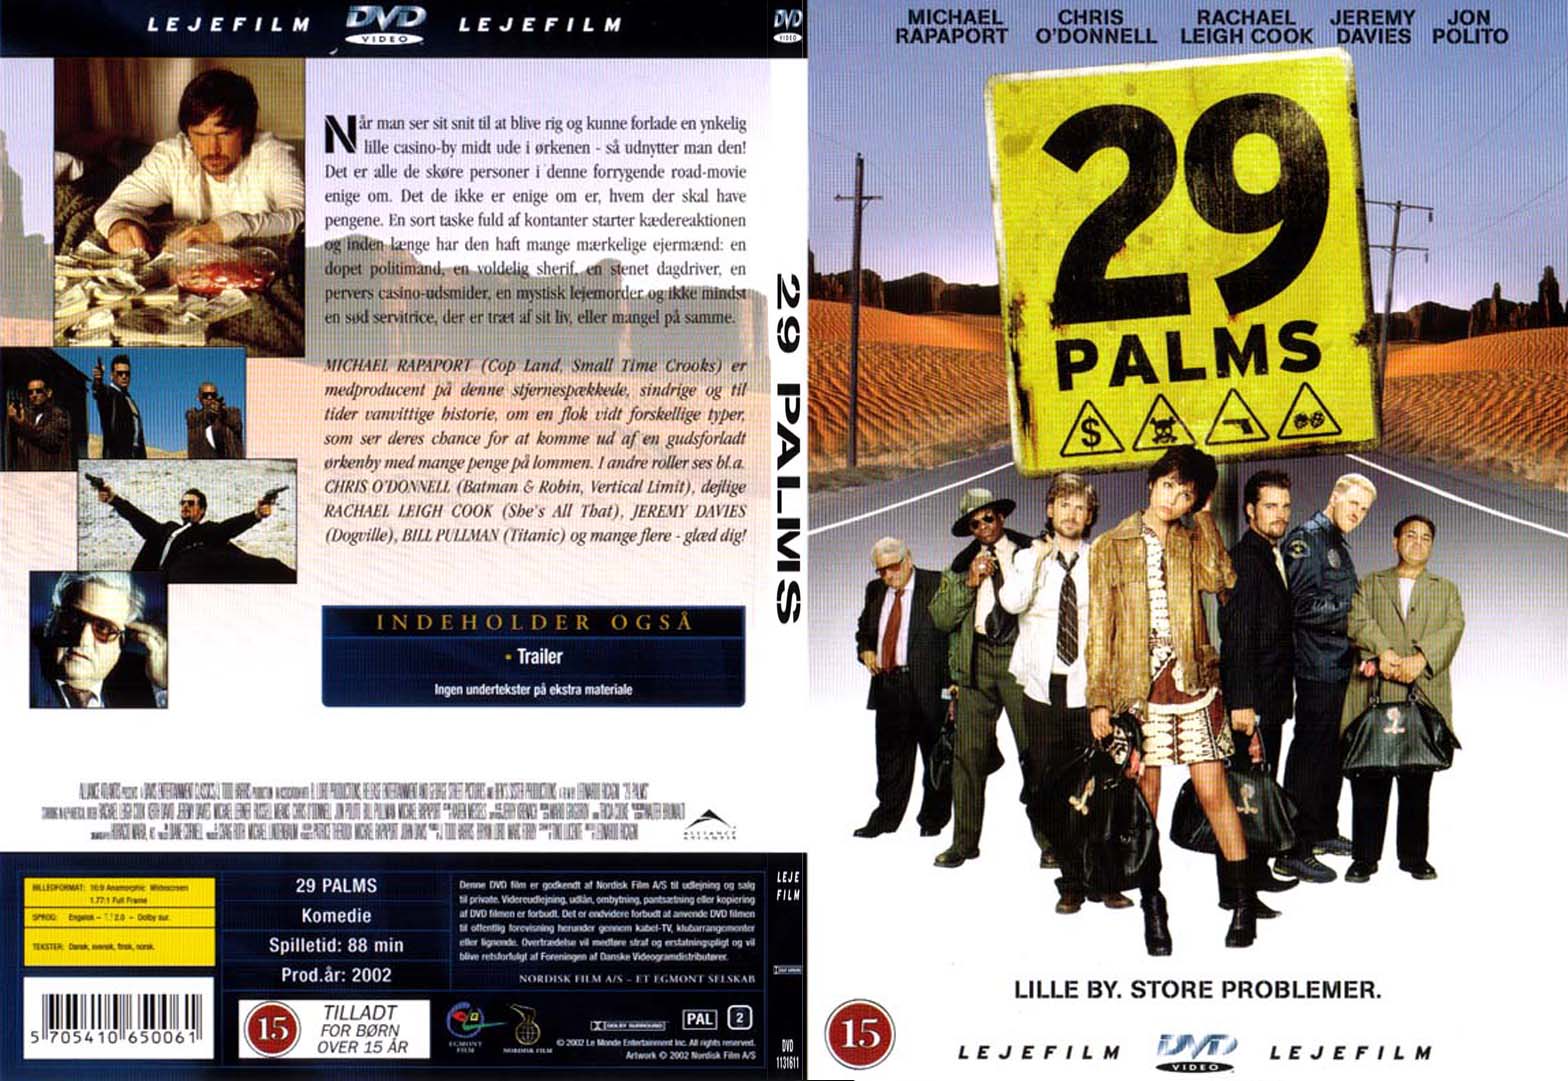 Jaquette DVD 29 palms - SLIM